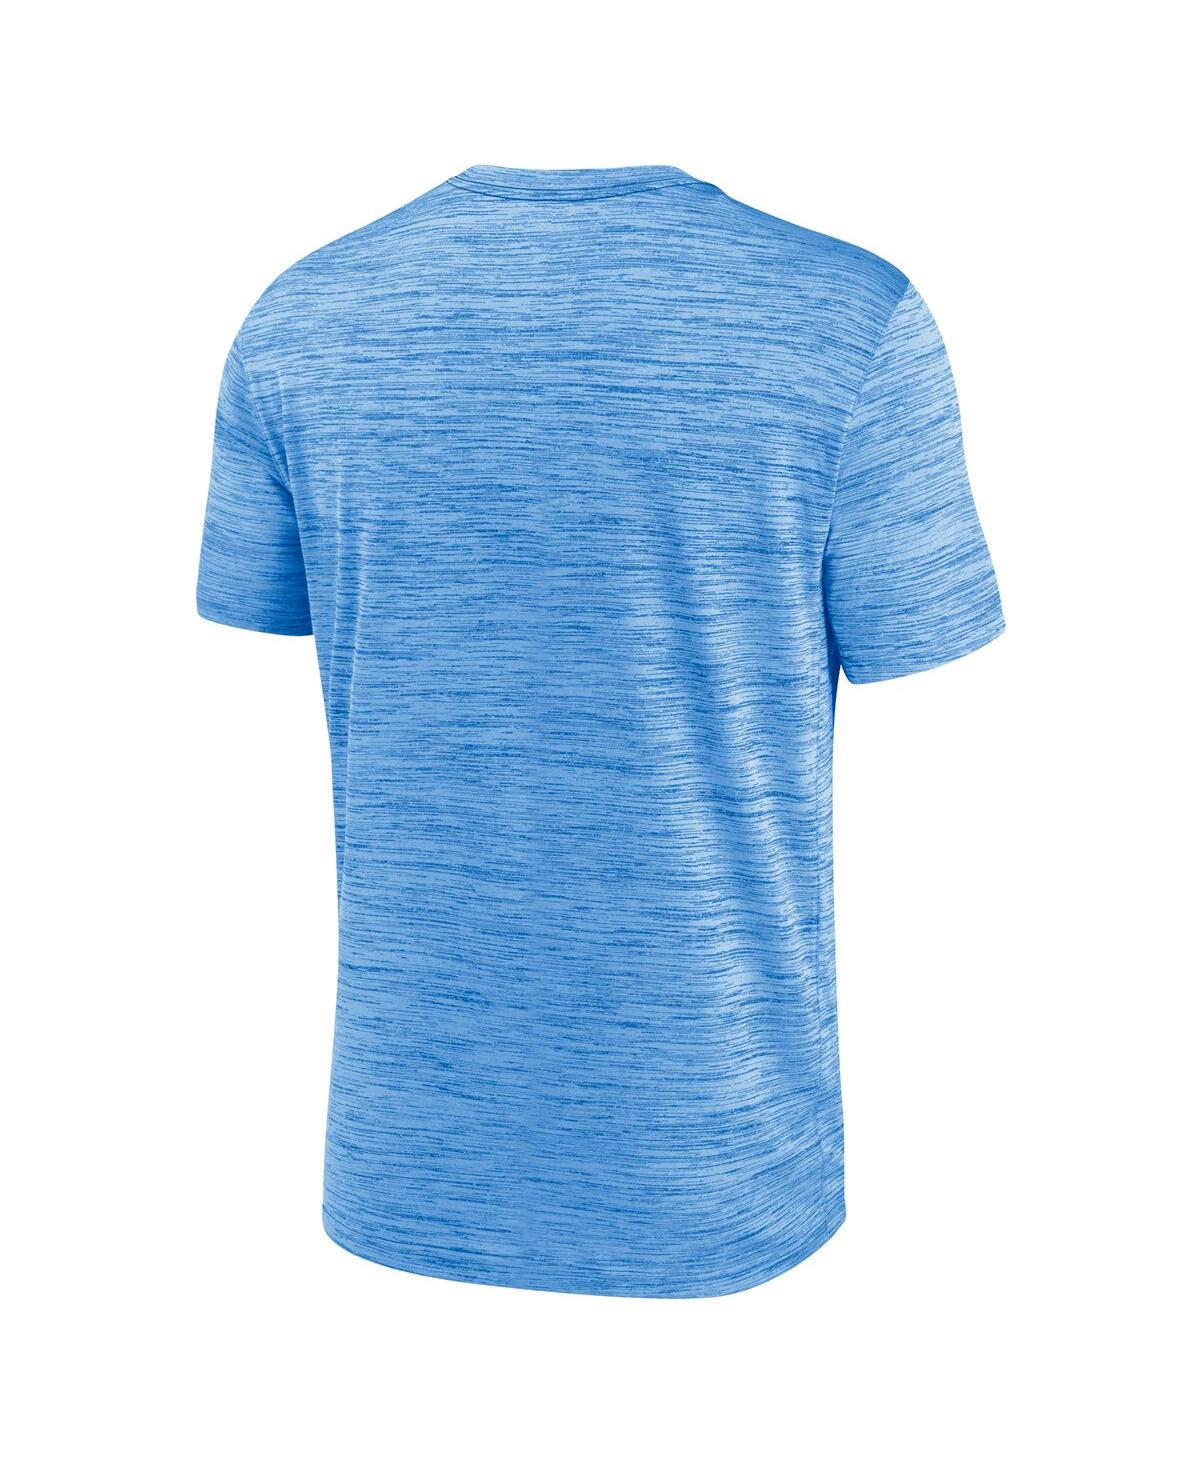 Shop Nike Men's  Powder Blue Milwaukee Brewers City Connect Practice Velocity Performance T-shirt